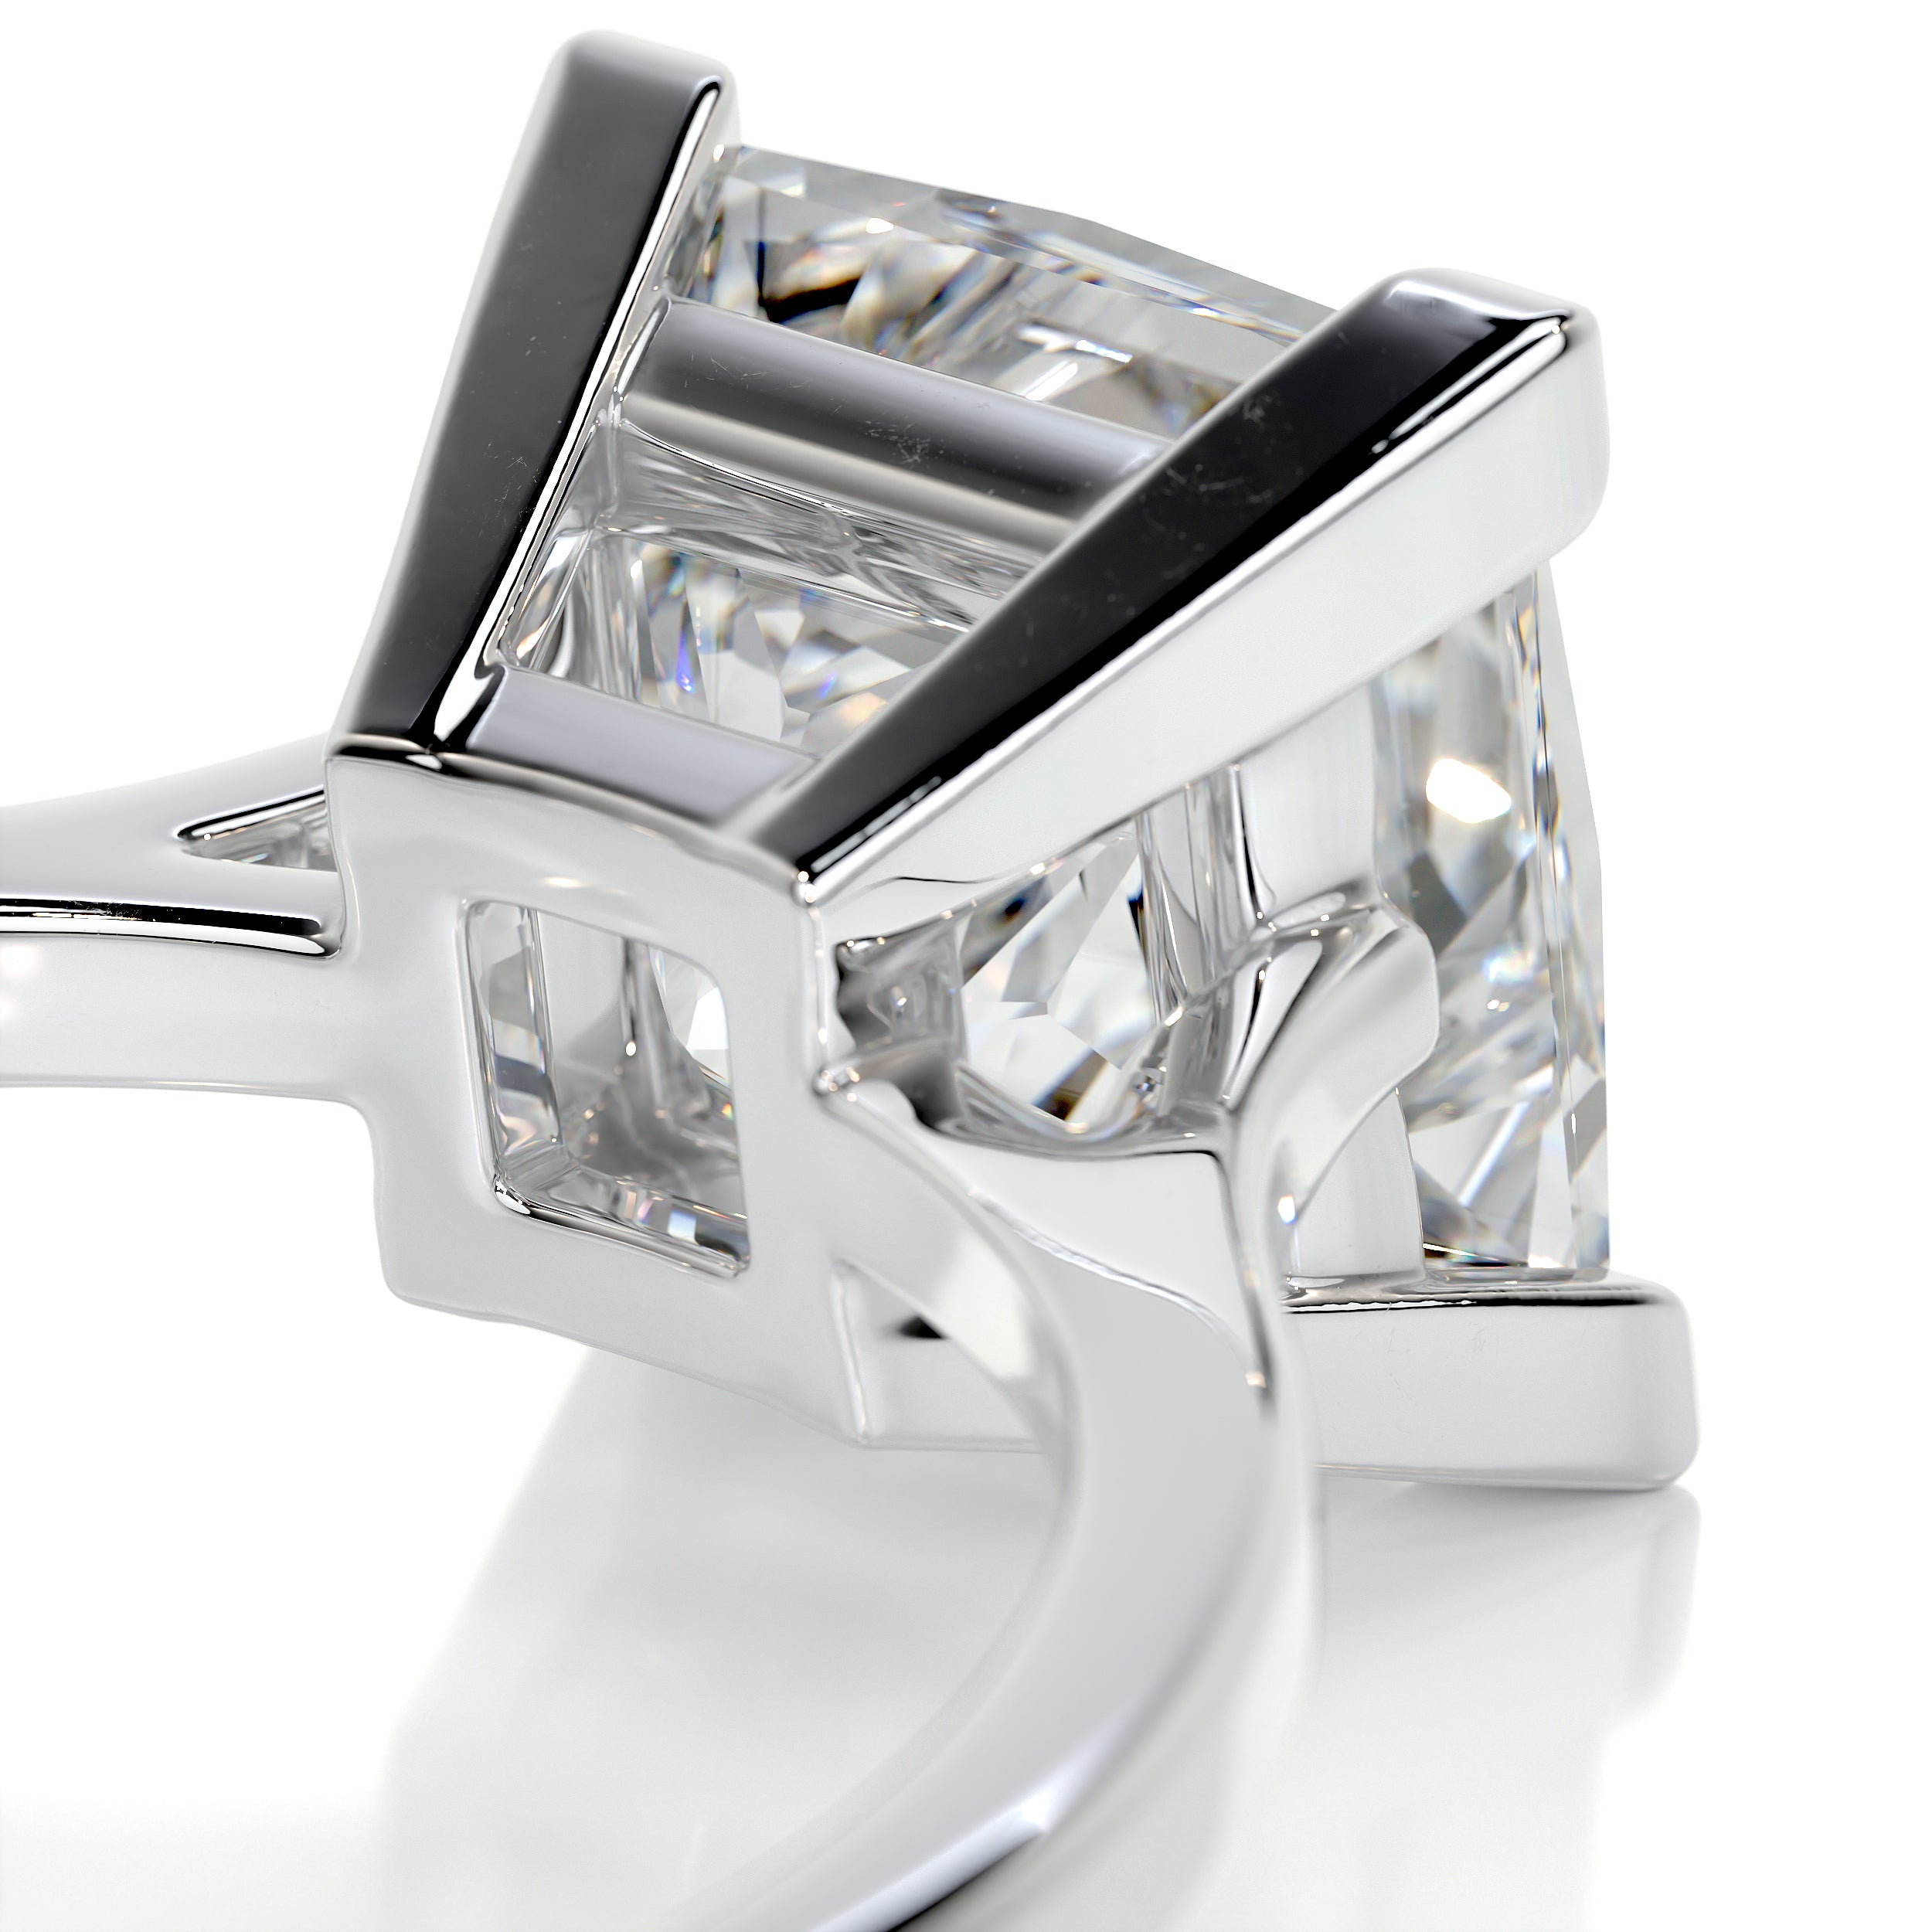 Ella Diamond Engagement Ring -14K White Gold